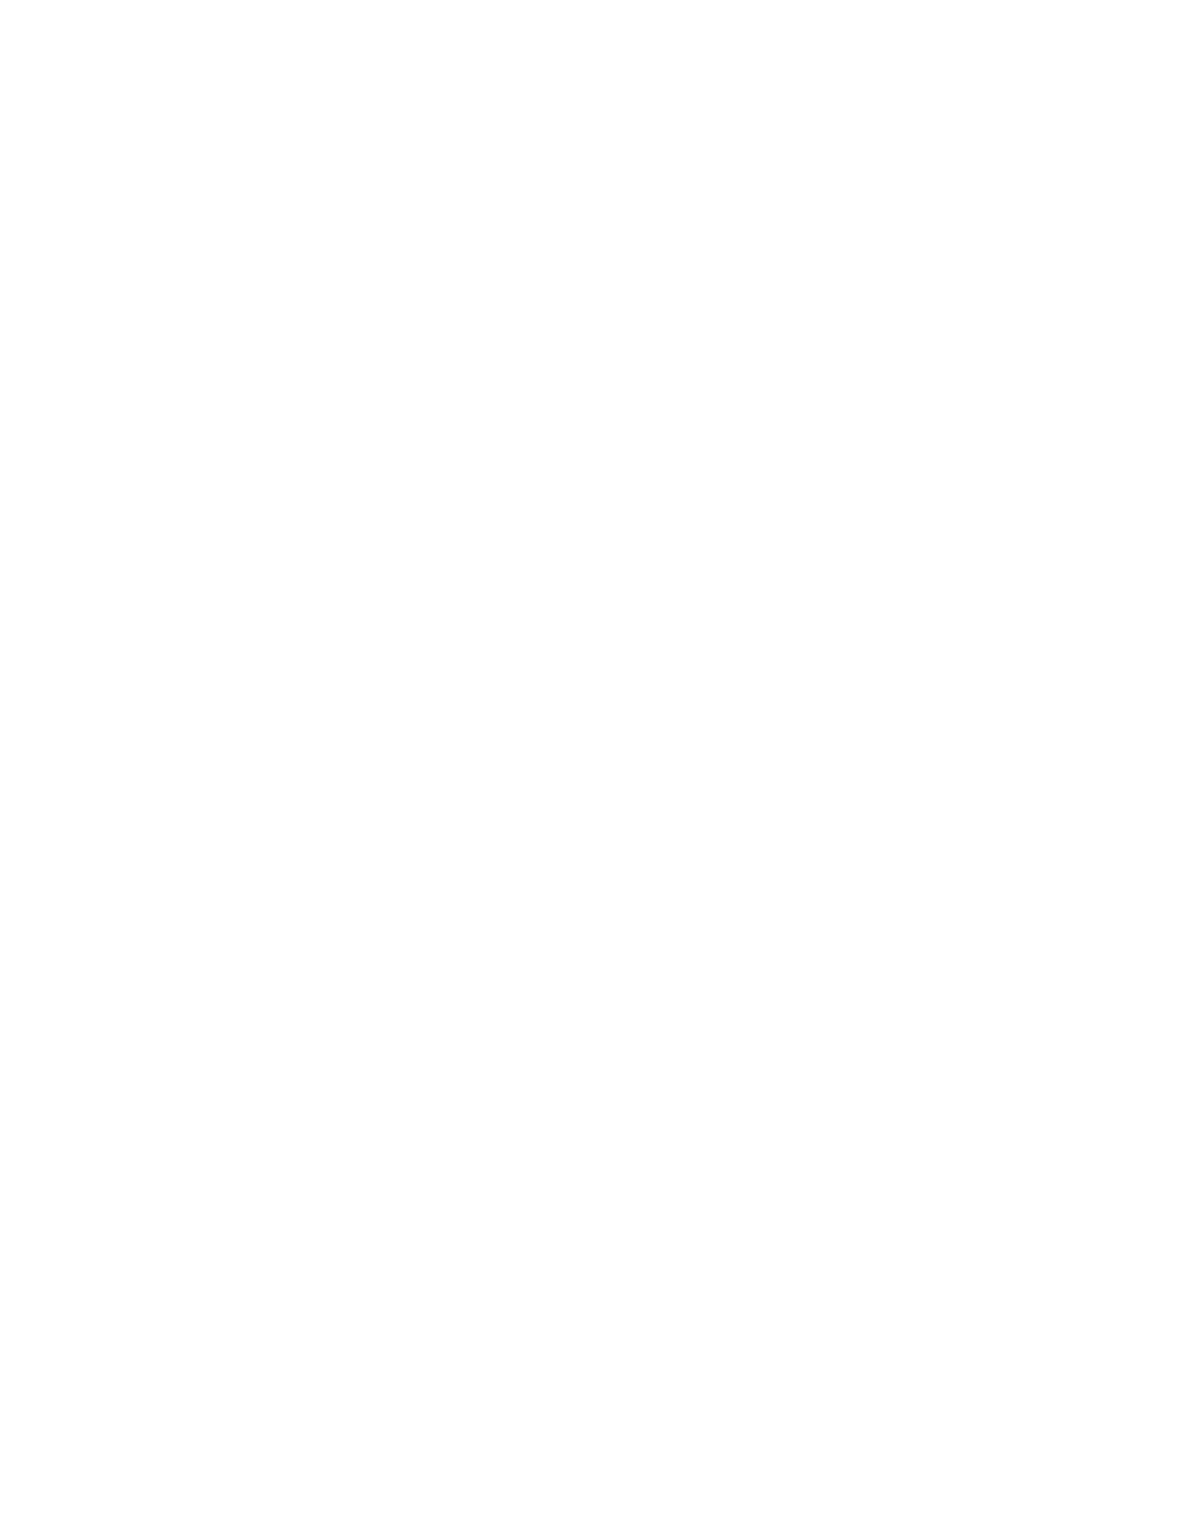 BCS_logo_2021 - white